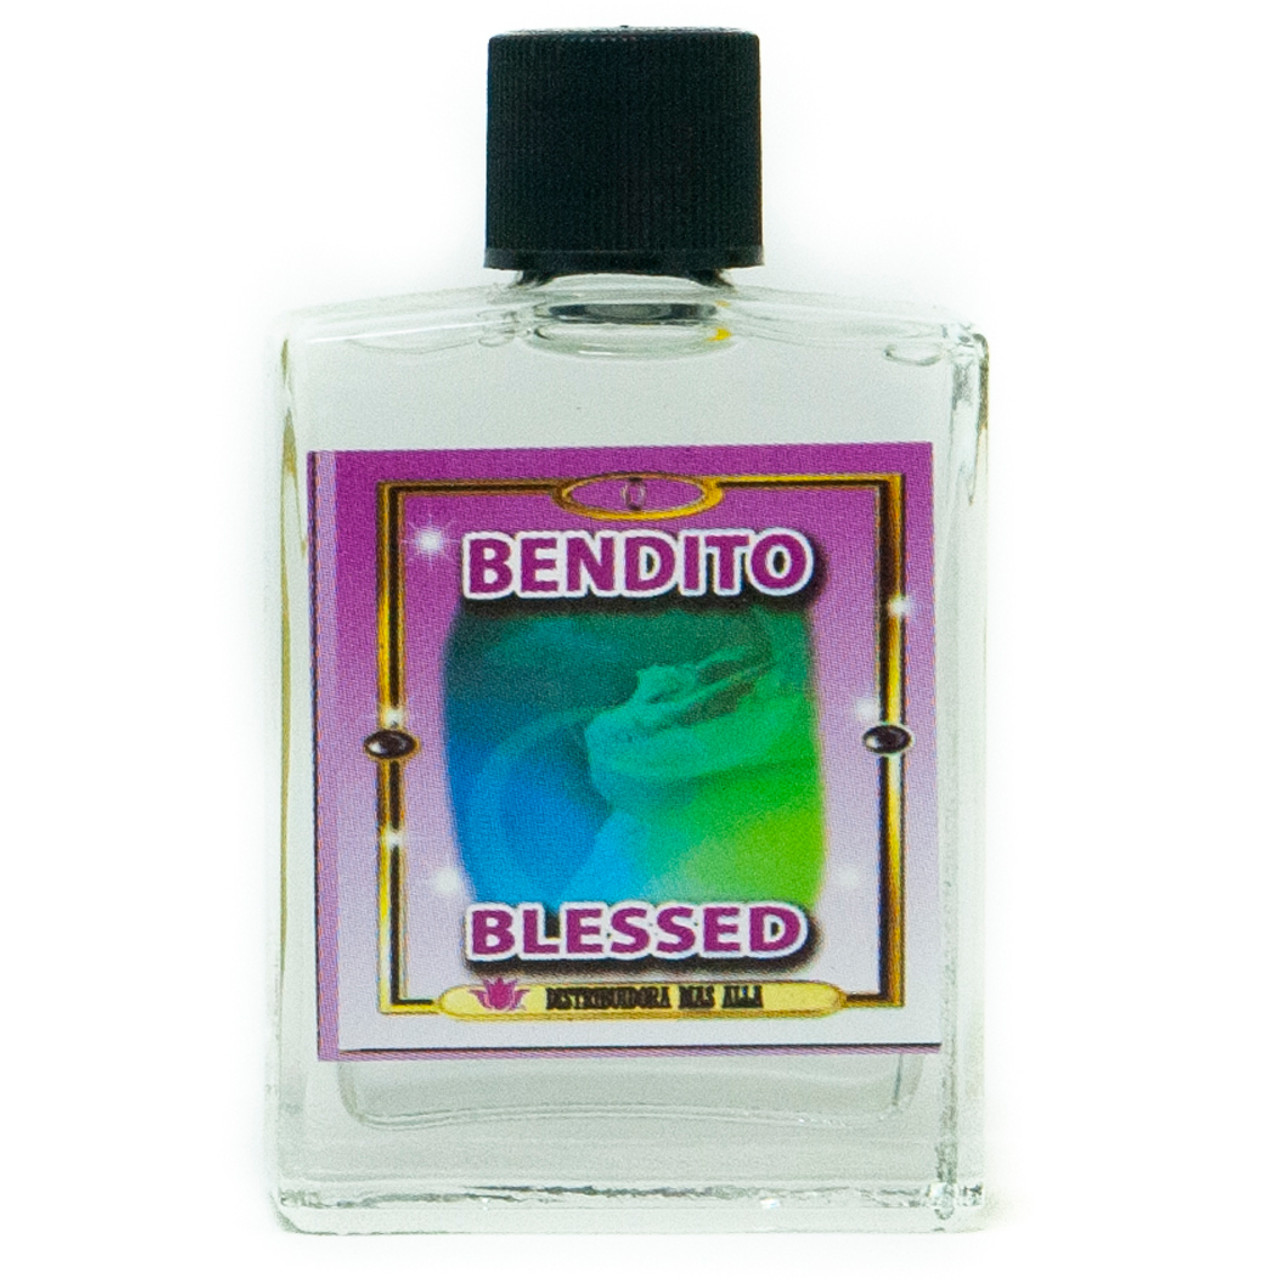 Perfume Bendito - Eseoteric Perfume Blessed